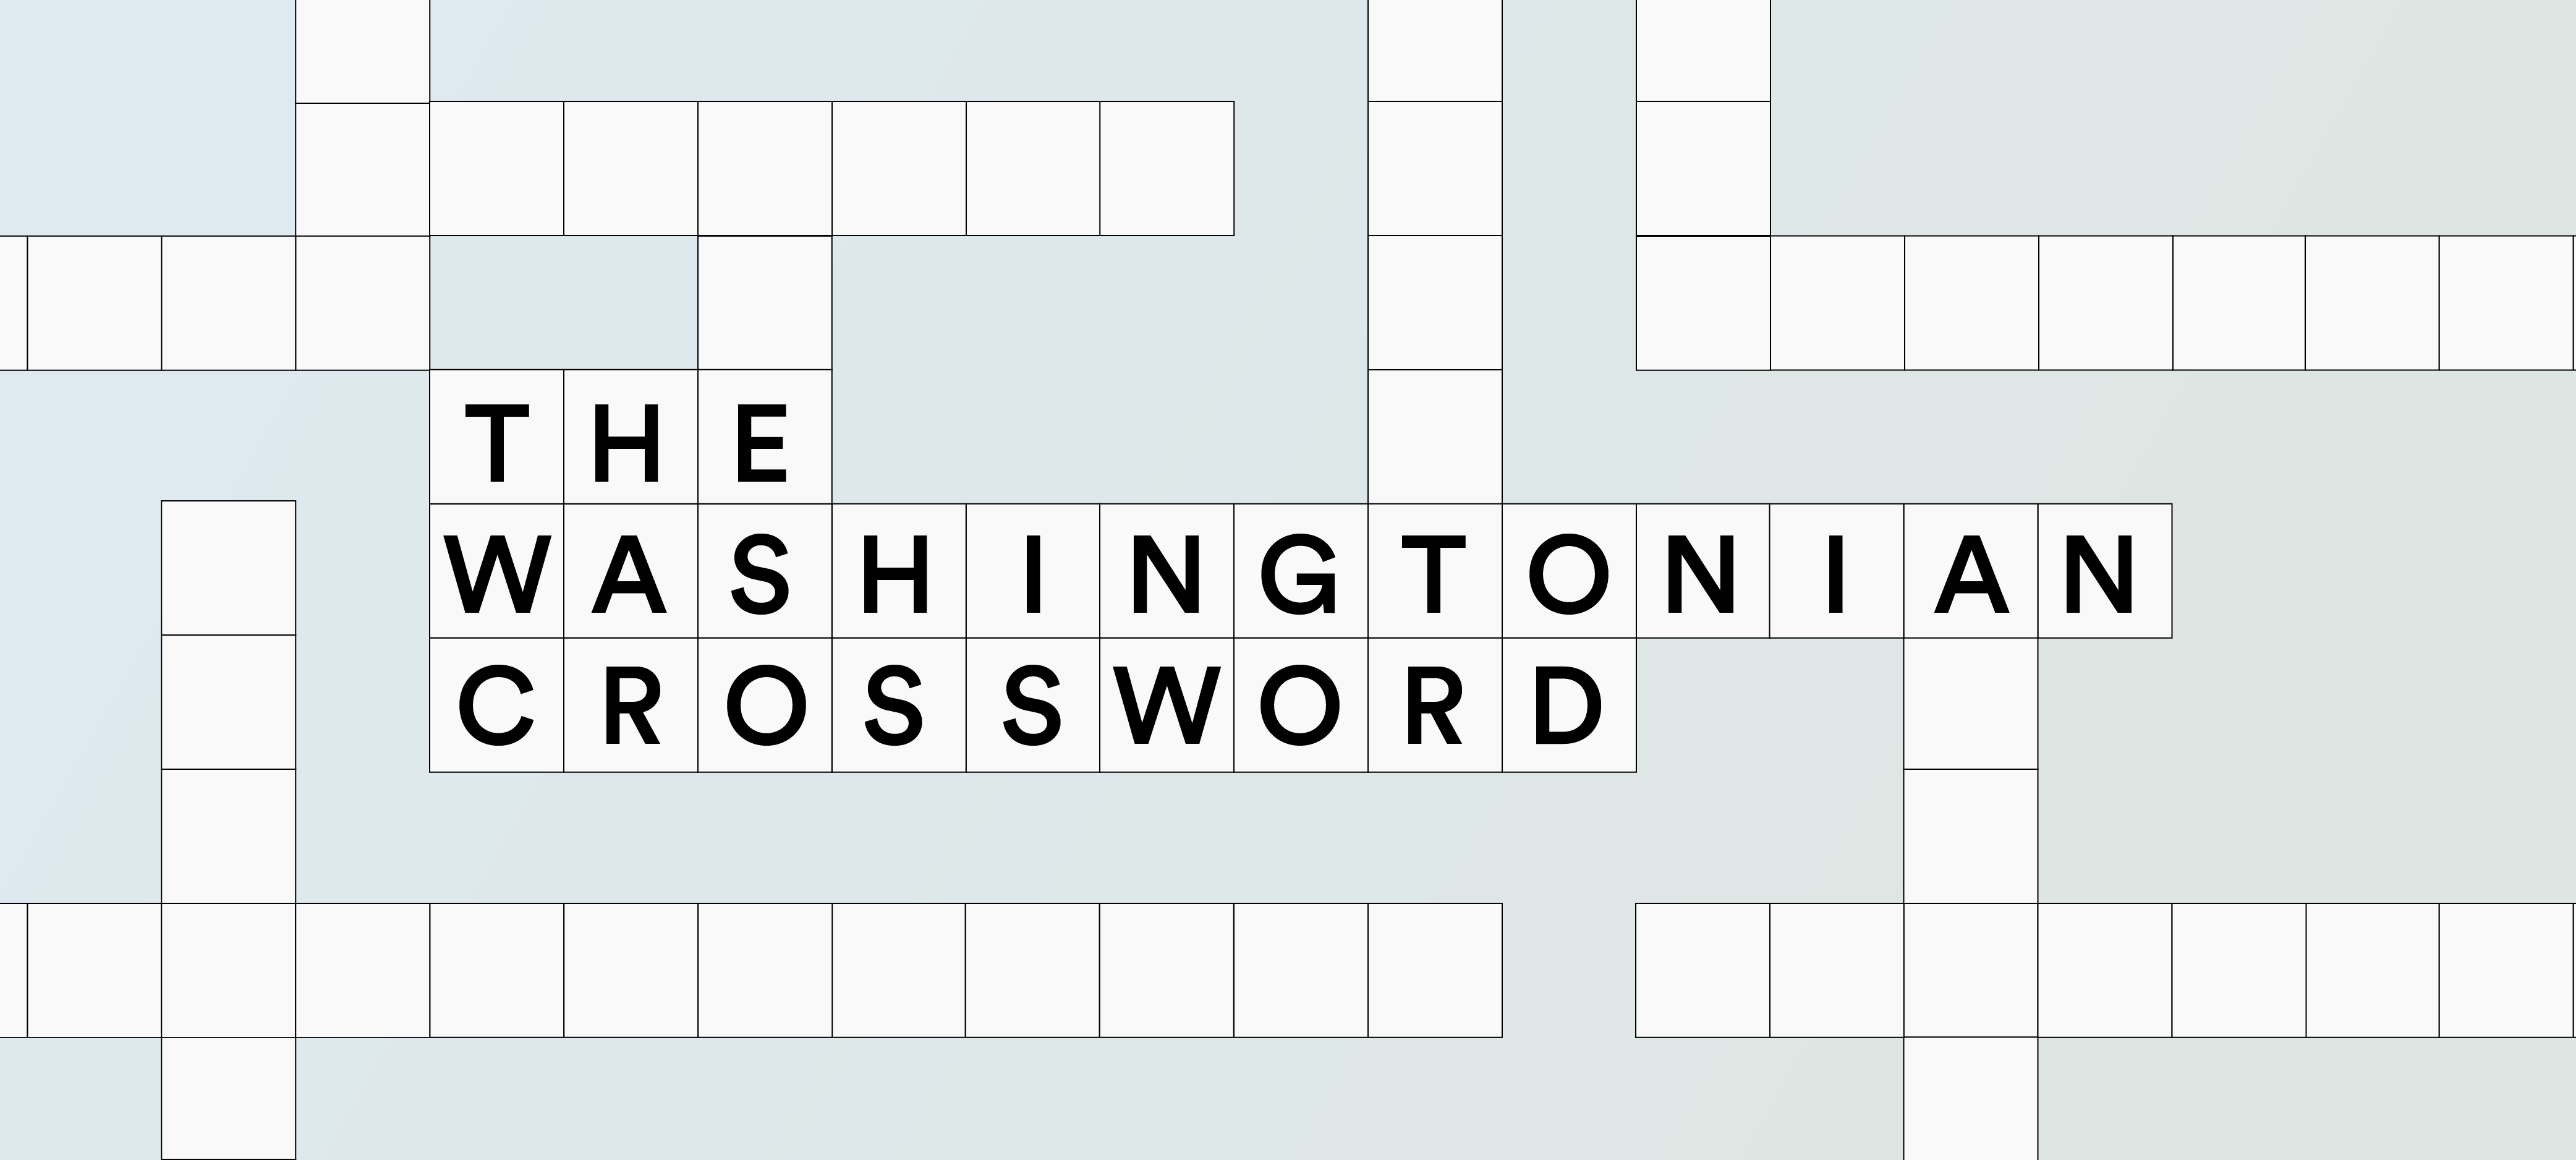 The Washingtonian Crossword